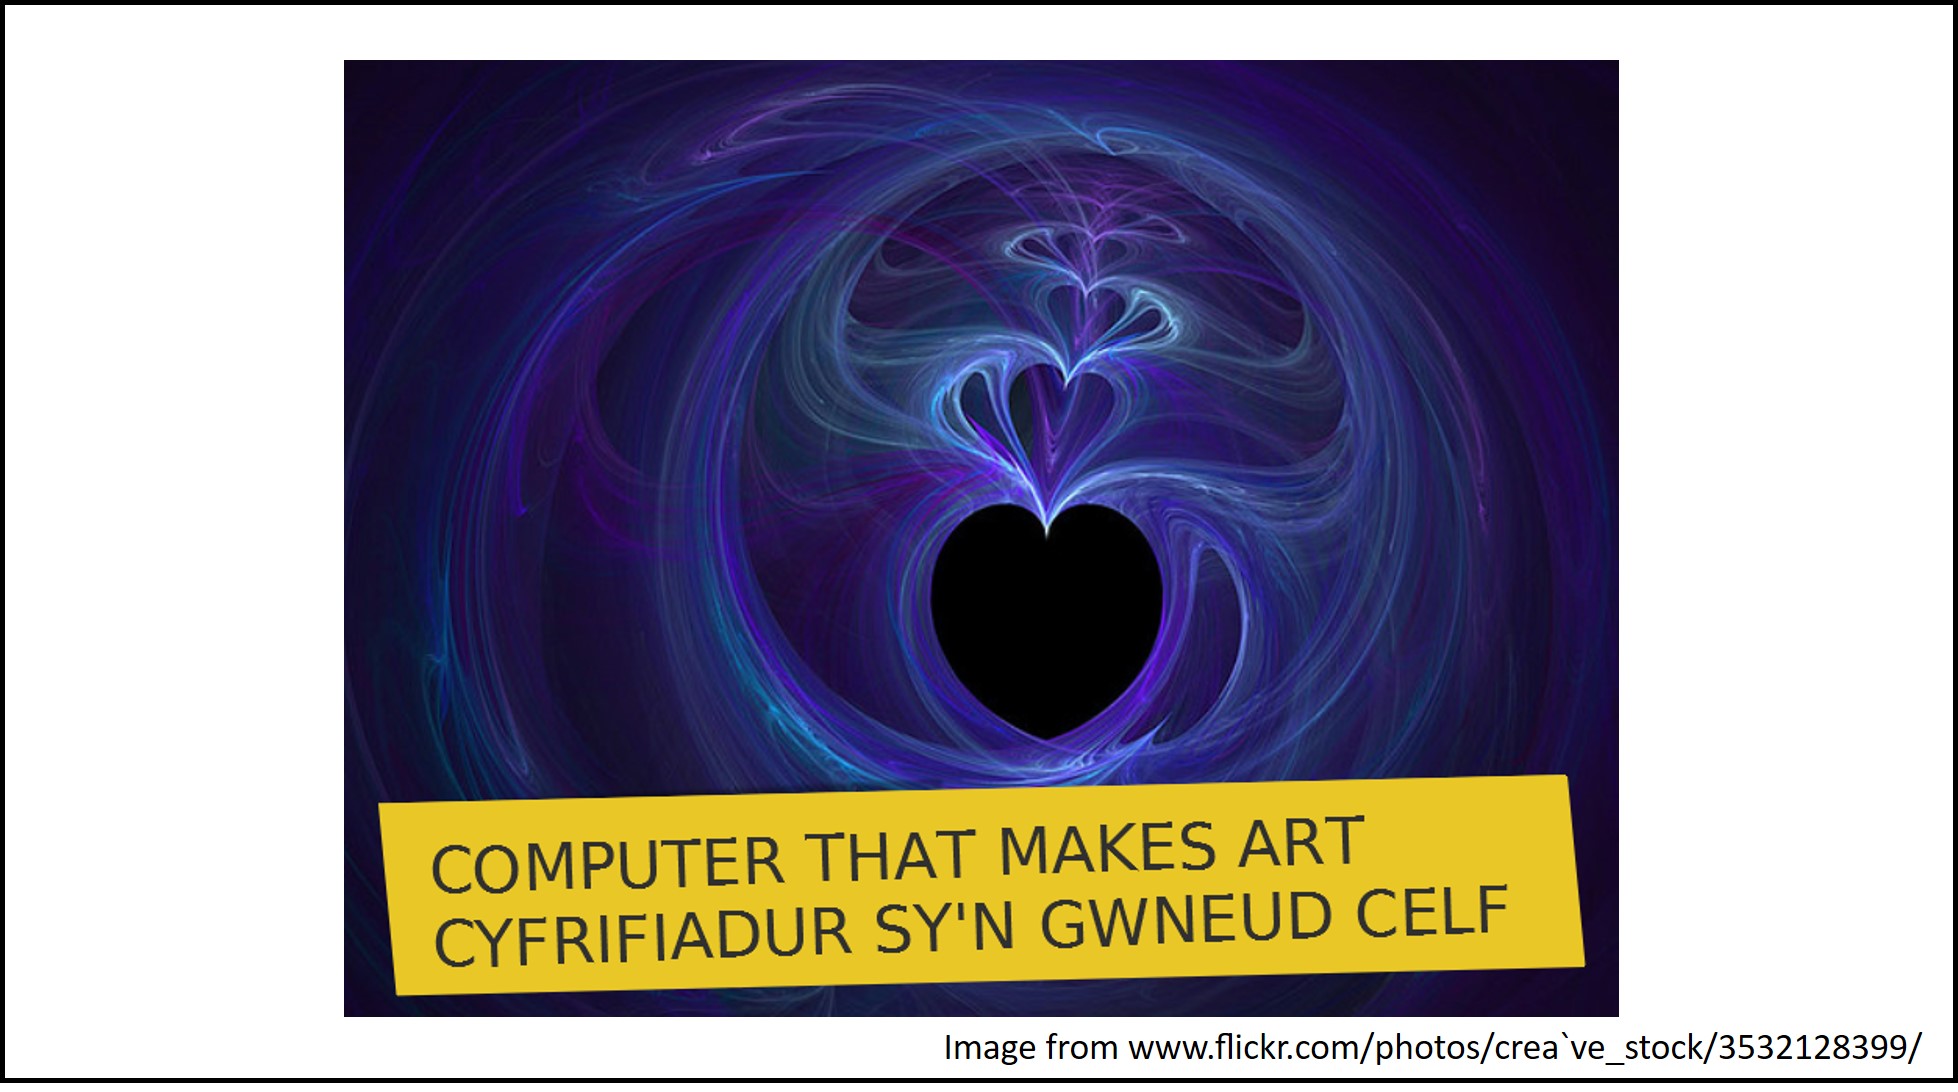 A computer that makes art